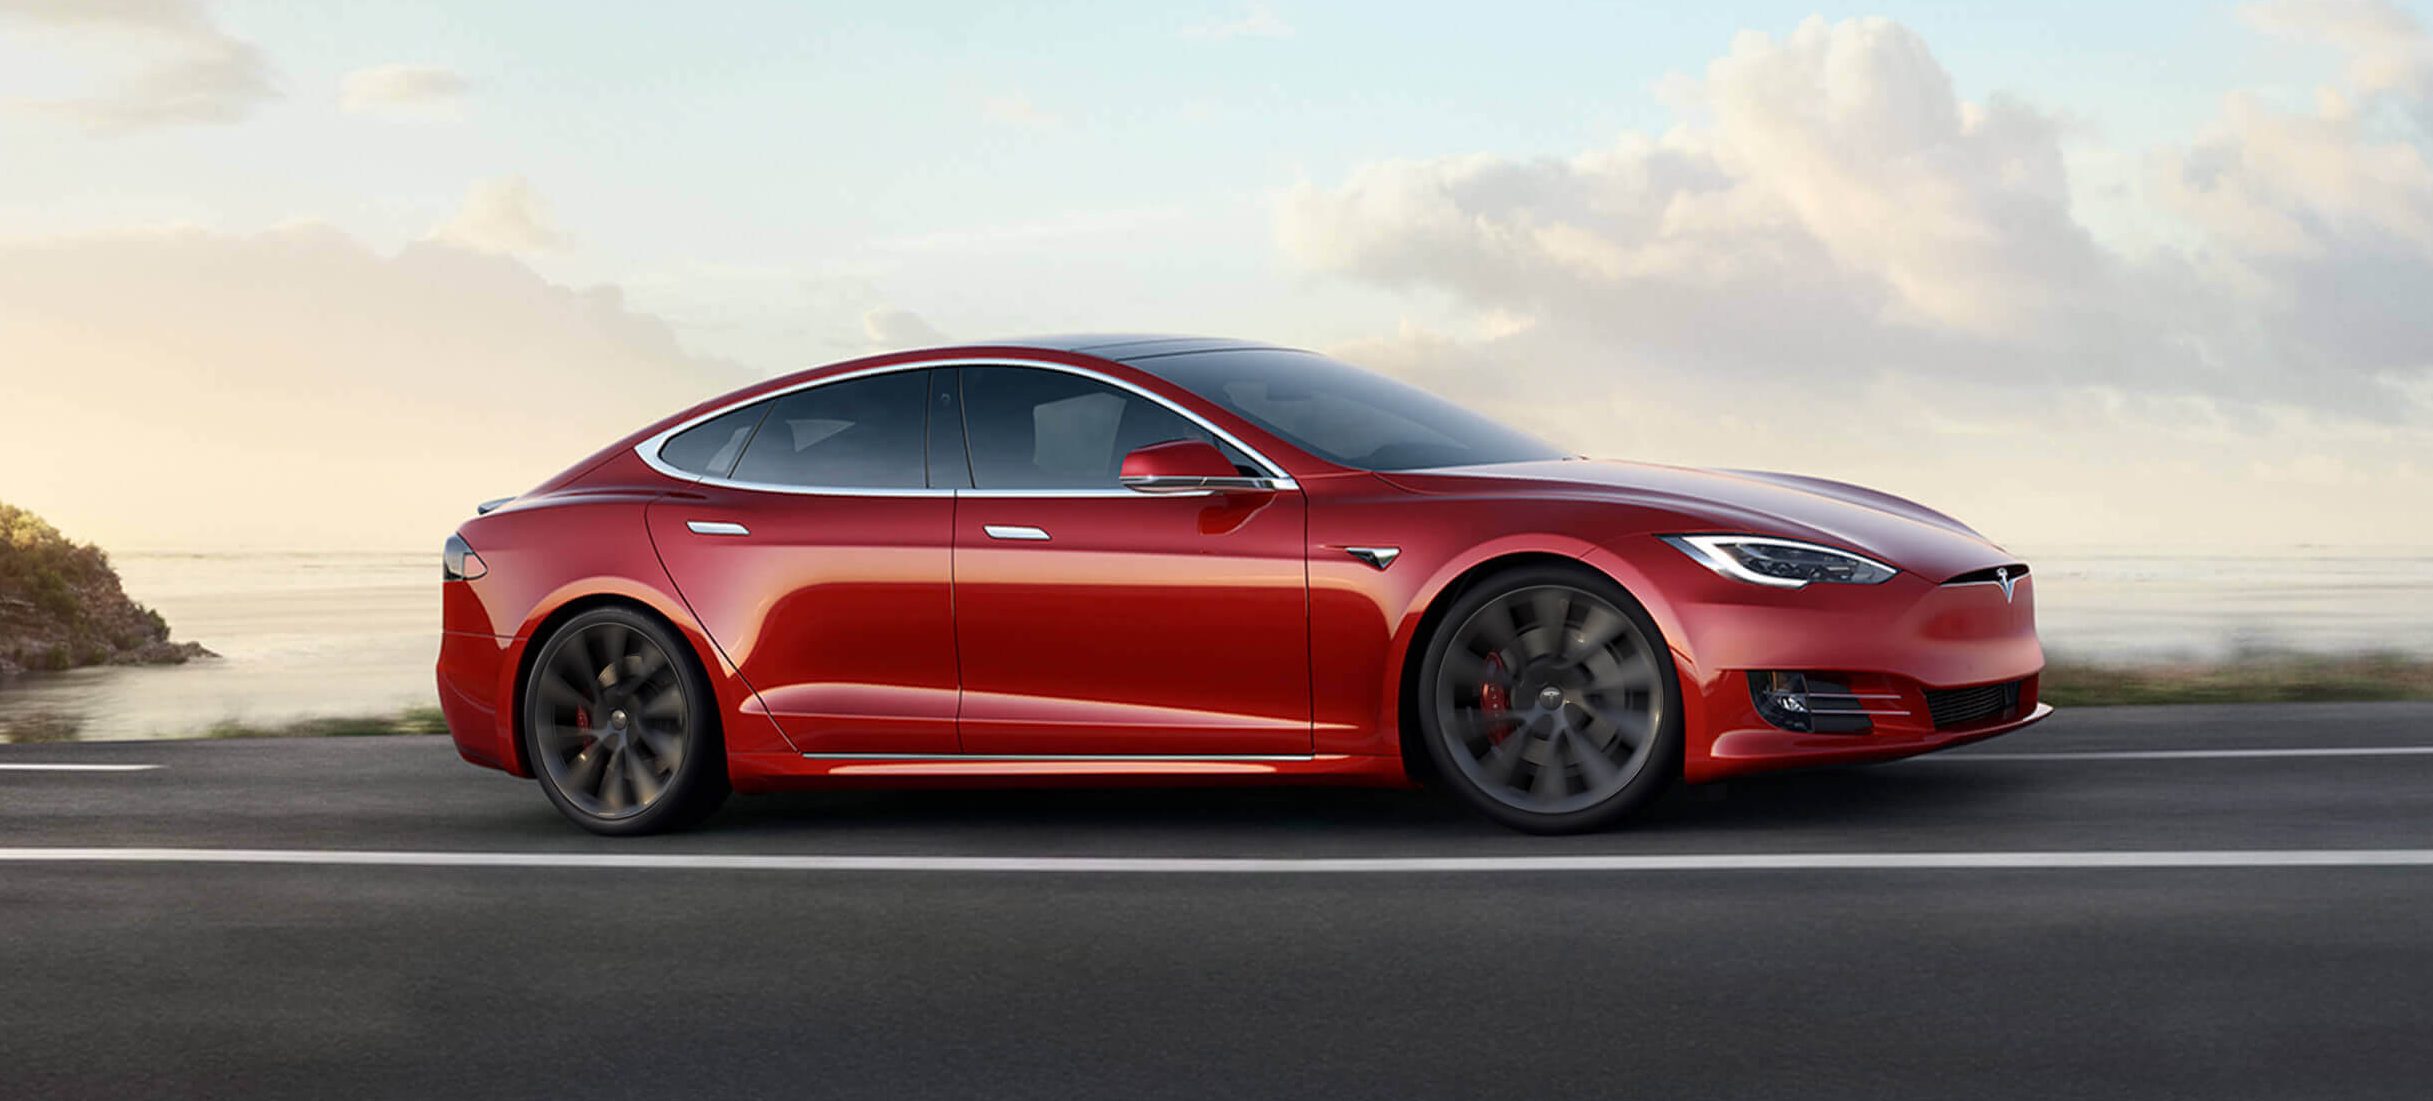 Tesla claims Model S